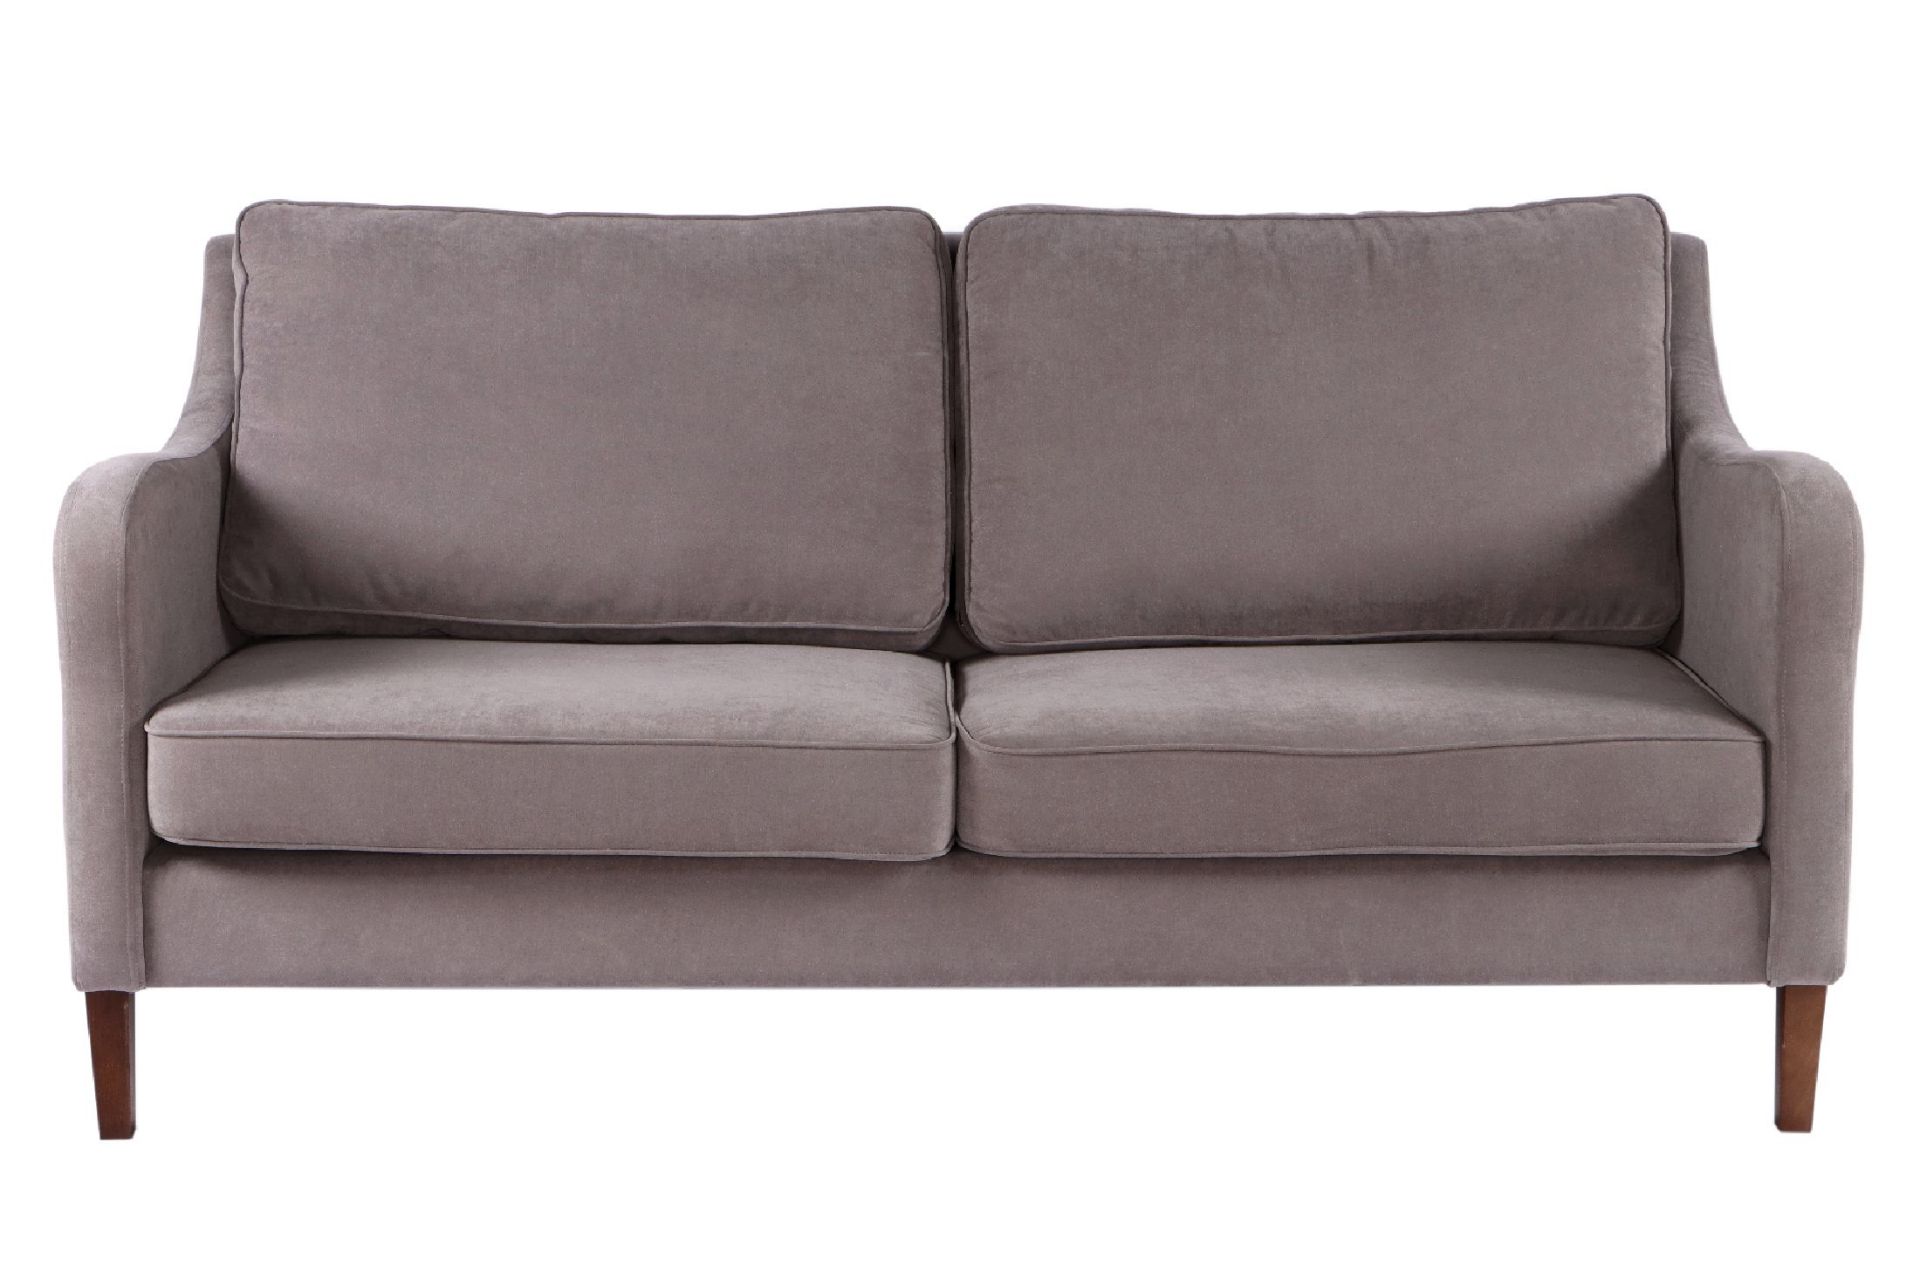 2-sitzer Sofa,  graue Stoffbezüge, Kissen lose aufgelegt,